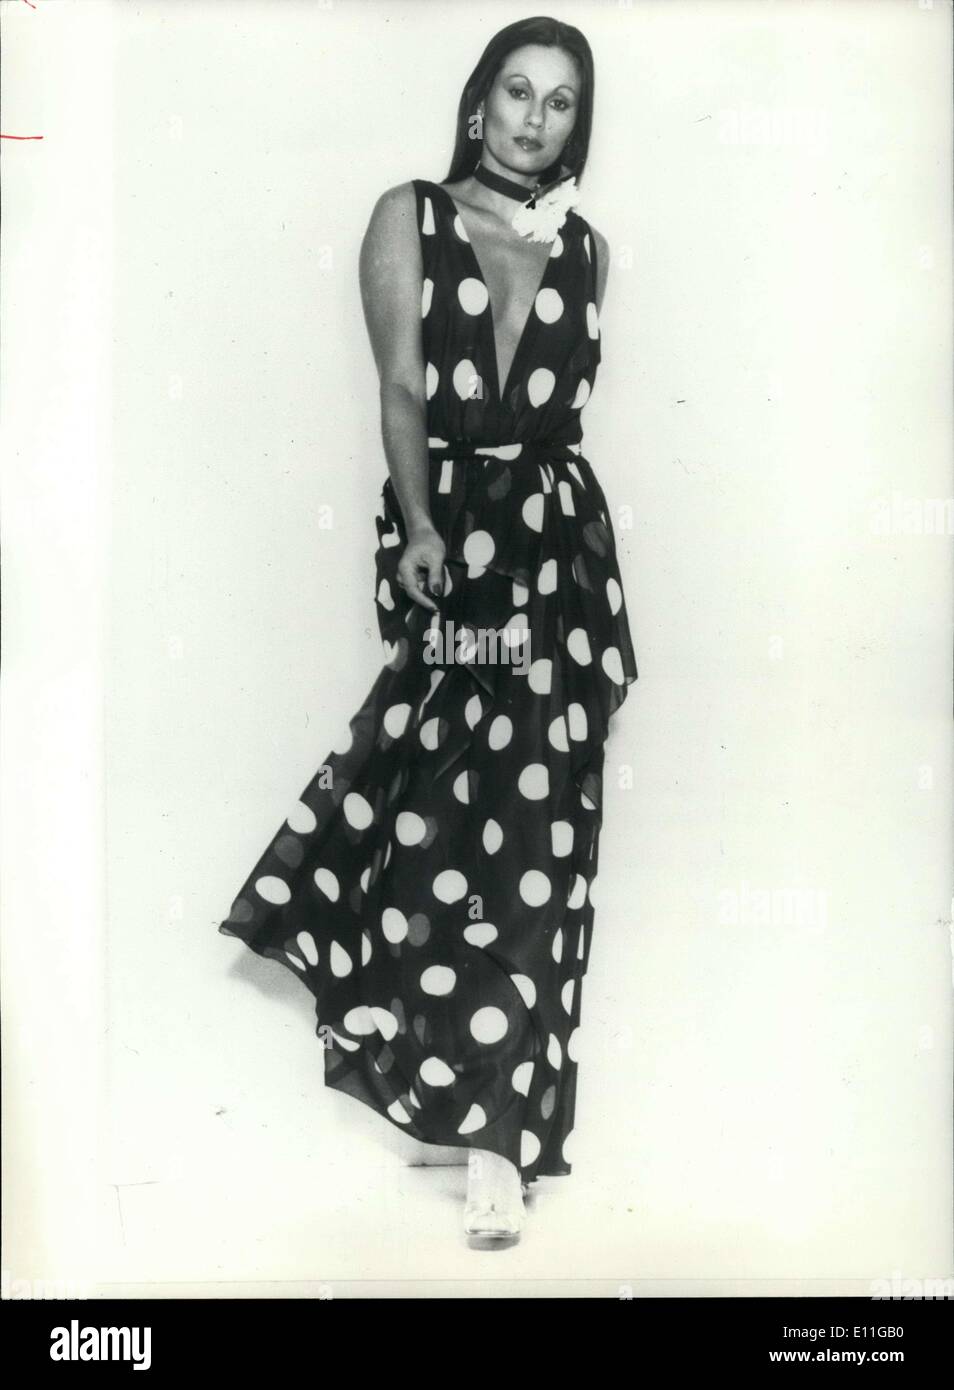 Jan. 17, 1978 - Carven Spring-Summer Collection Polka Dot Cotton Dress Stock Photo